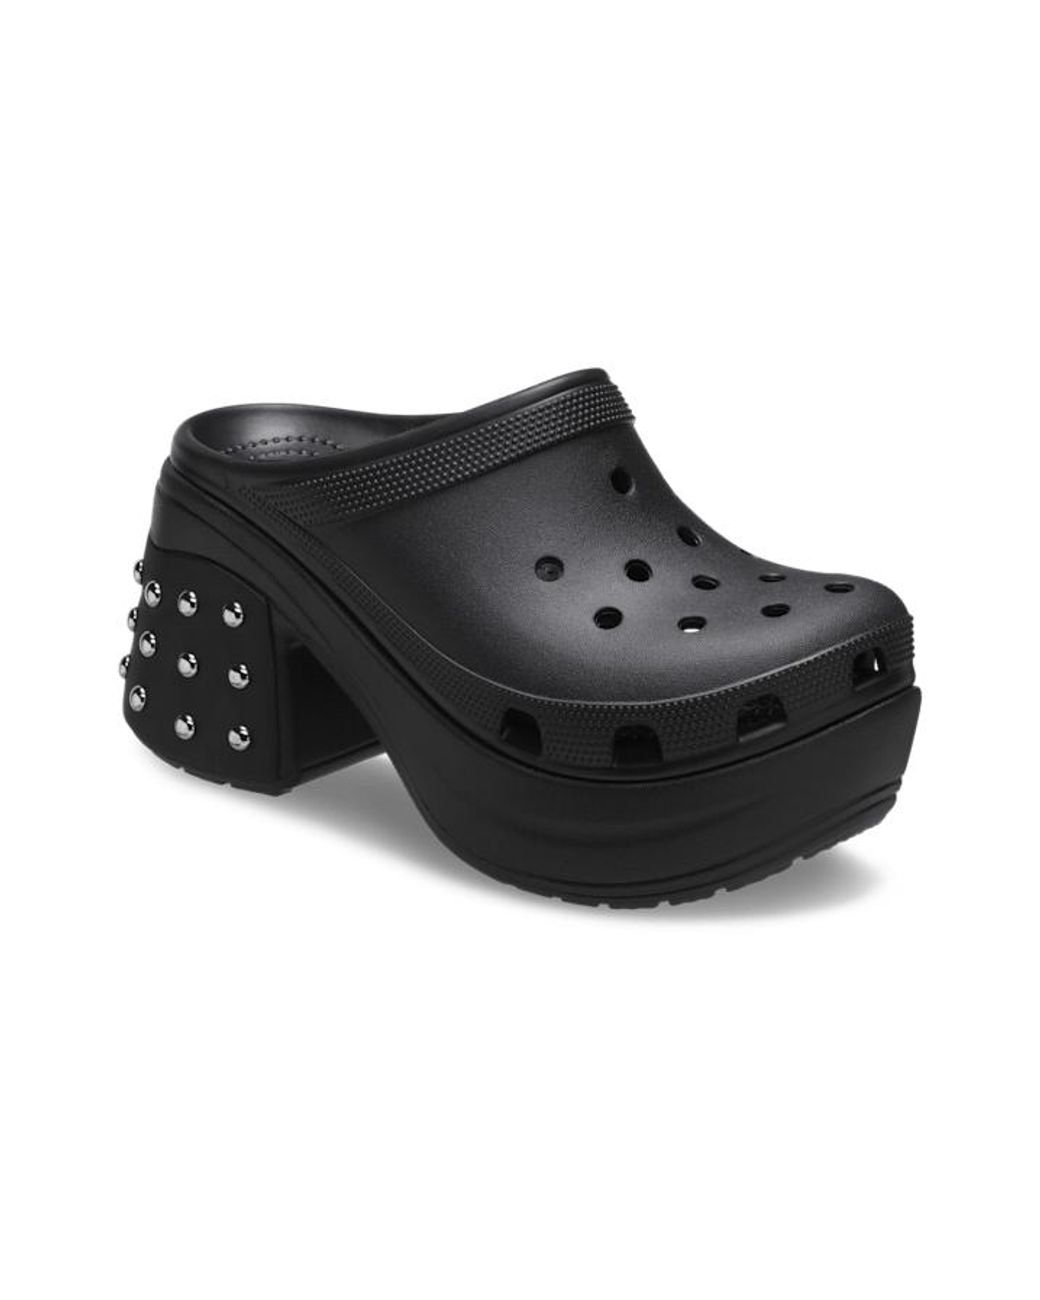 Crocs Siren Studded Clog, Black, M13